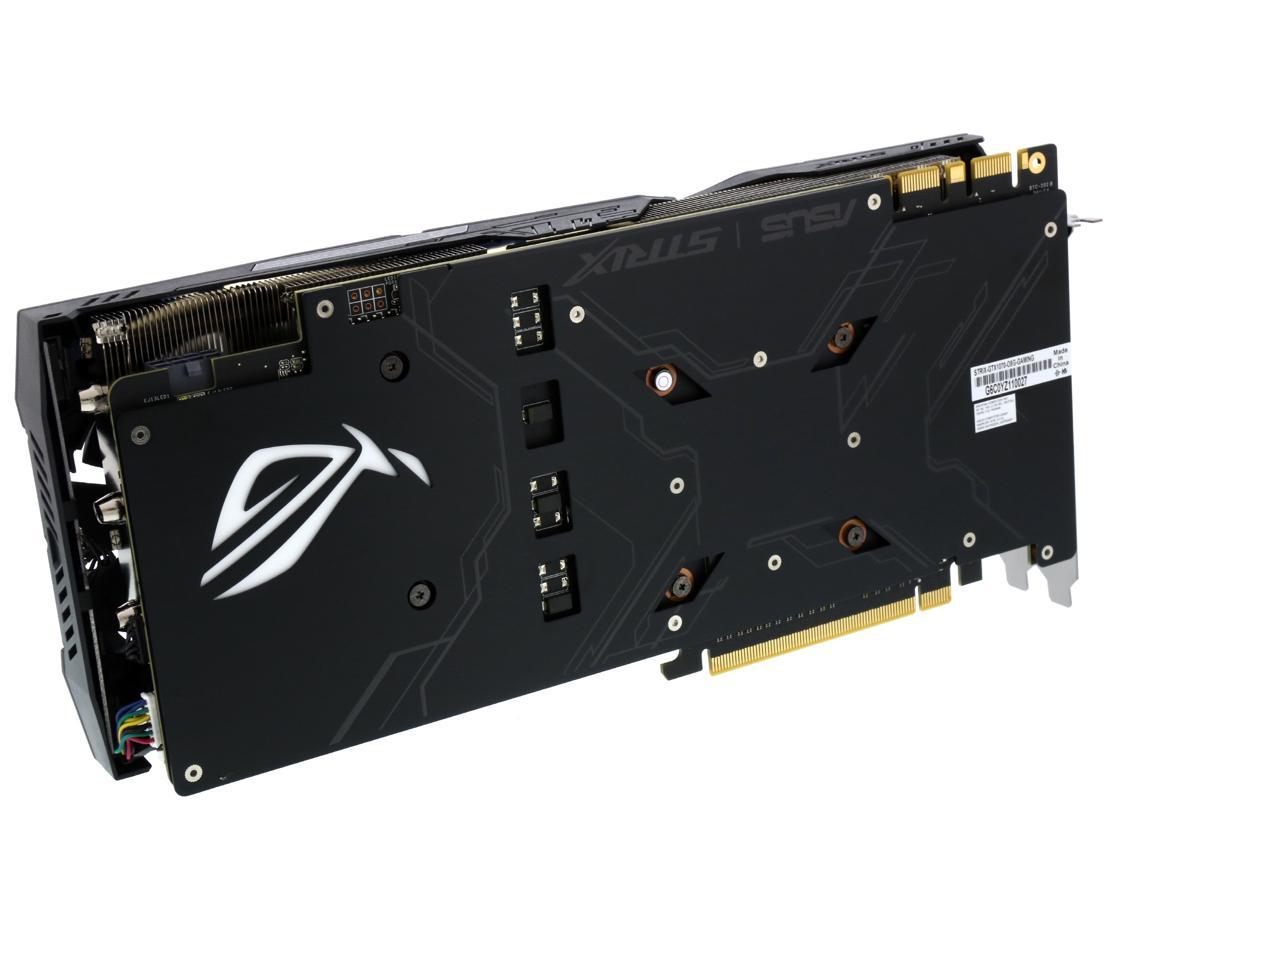 ASUS ROG GeForce GTX 1070 Video Card with RGB Lighting 